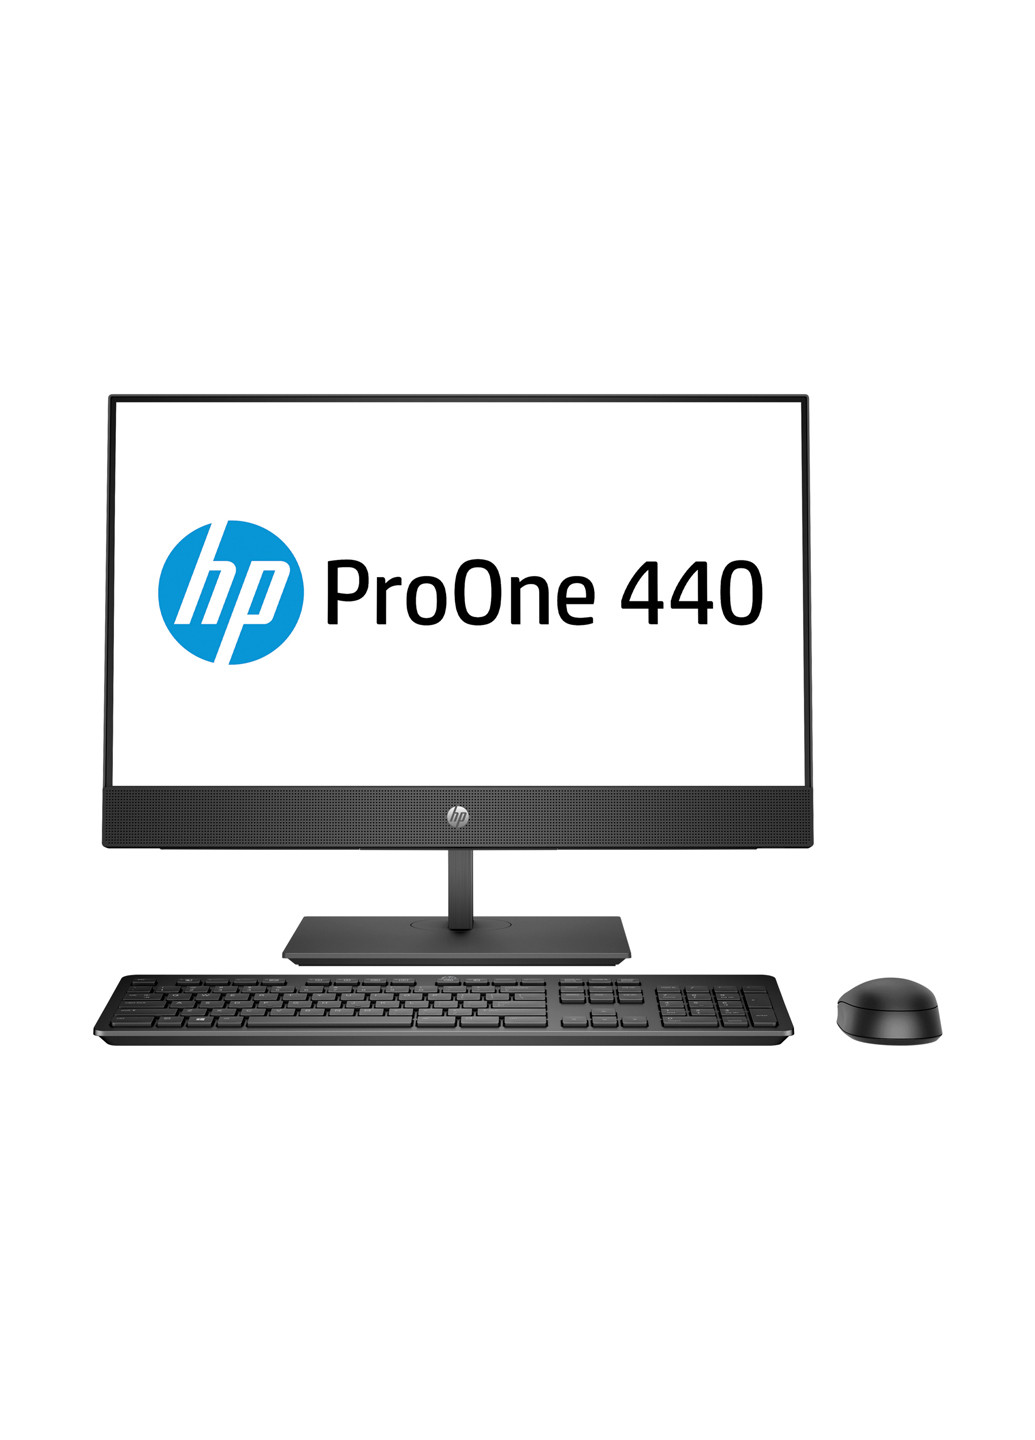 Моноблок 23.8 '' ProOne 440 G4 (4NU45EA) Black HP proone 440 g4 (4nu45ea) black (137608939)